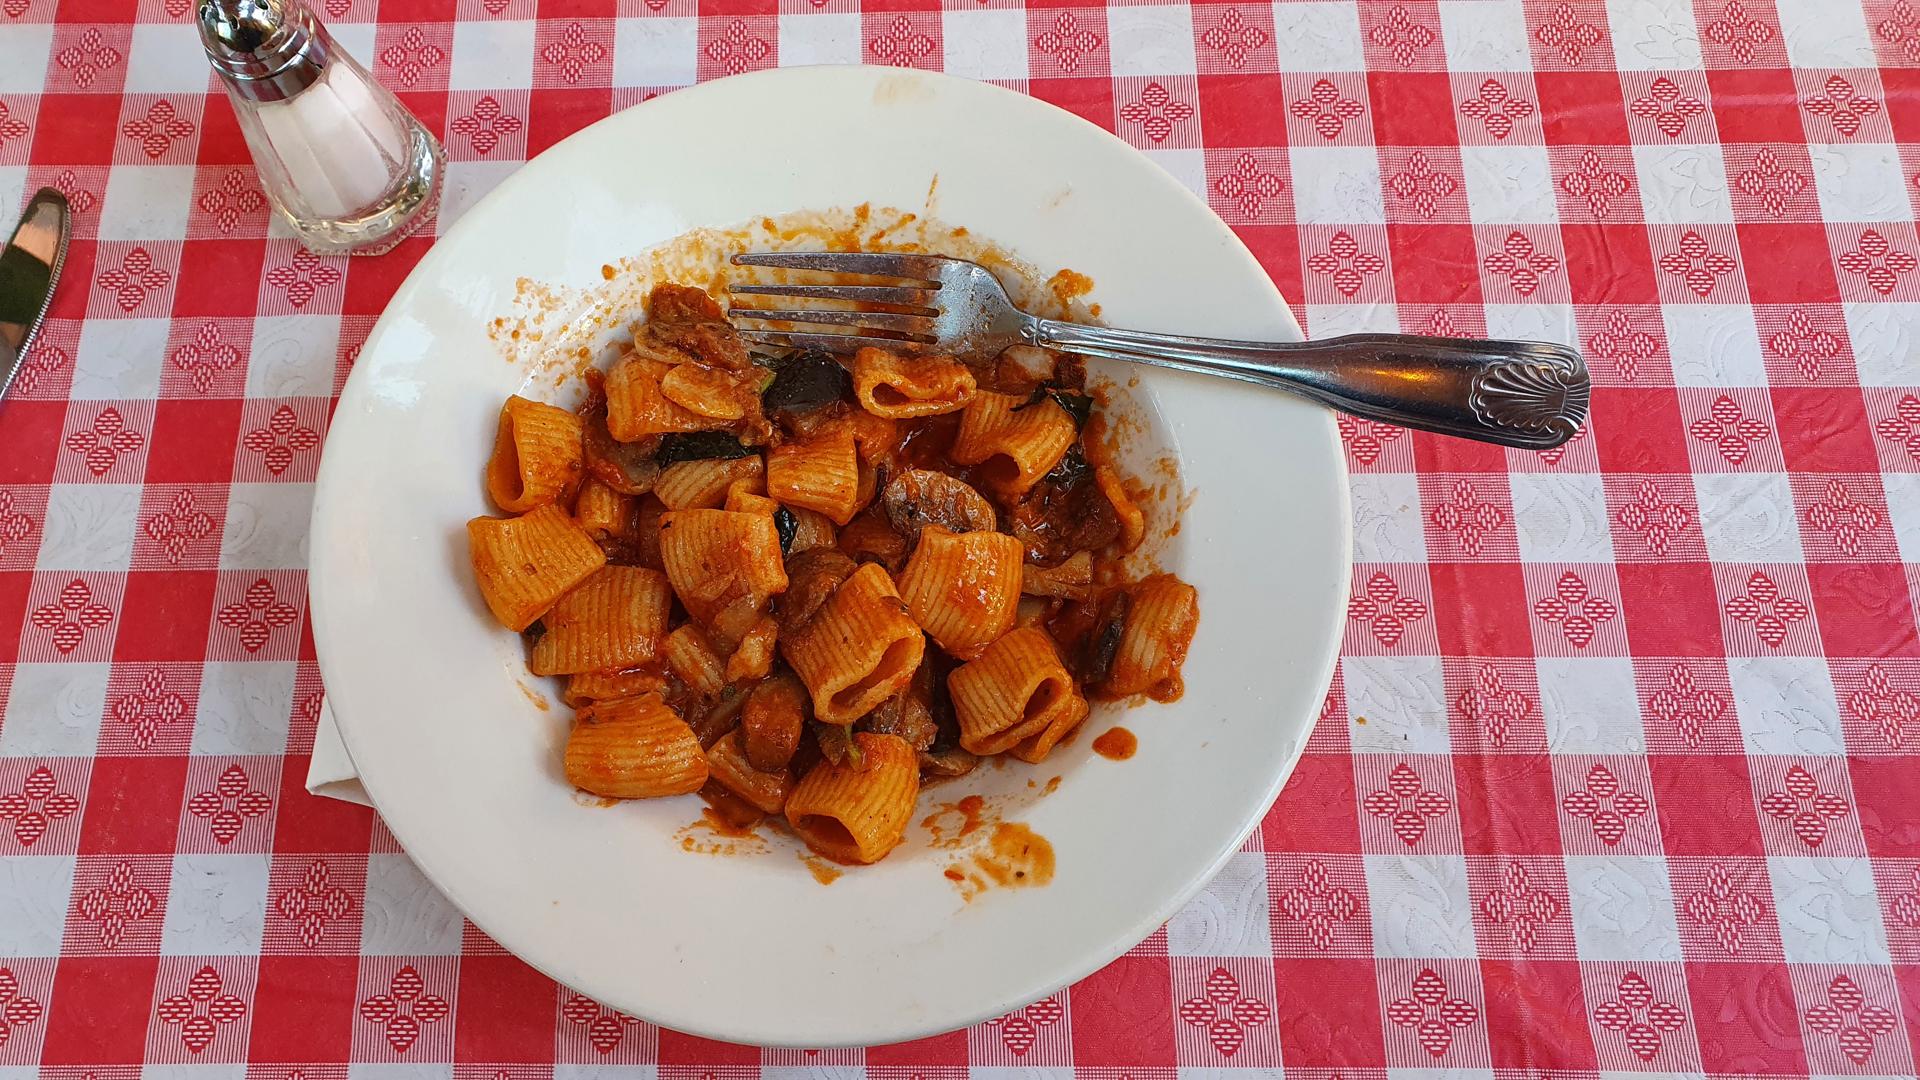 Vegan Italian food at San Marzano in East Village, New York